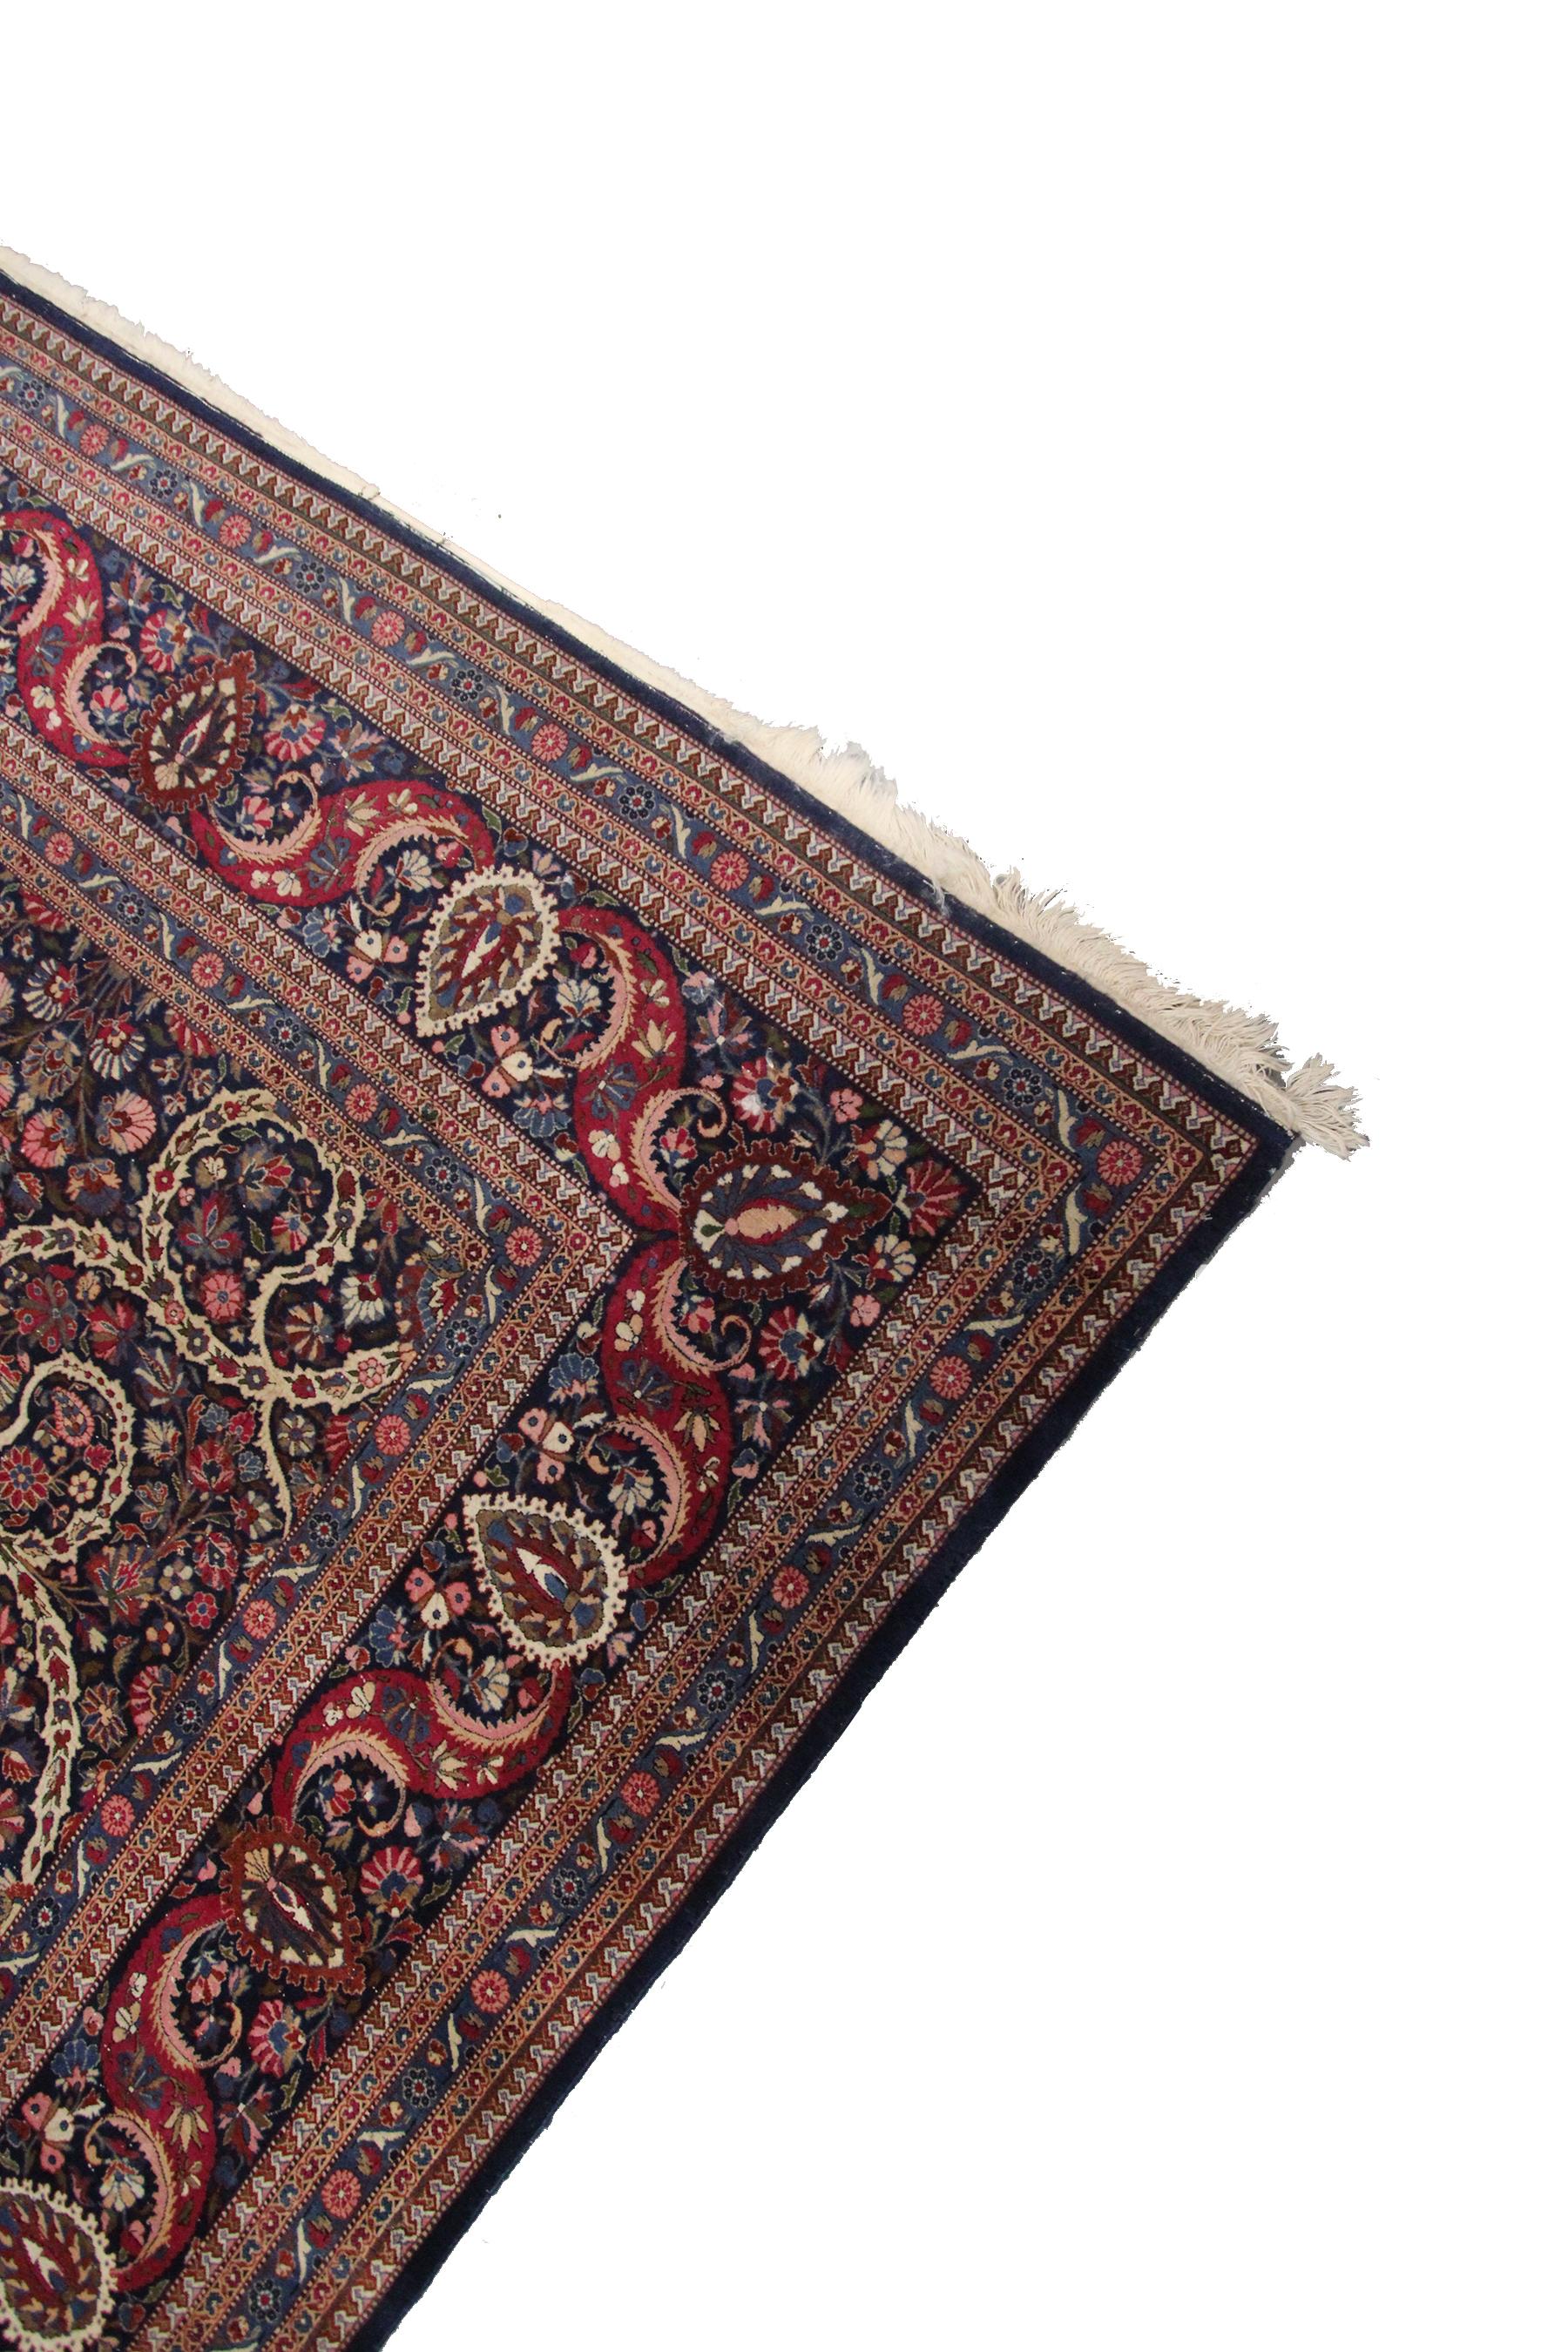 Antique Persian Dabir Kashan Rug Kork Wool Geometric Overall 11x14 Blue For Sale 2